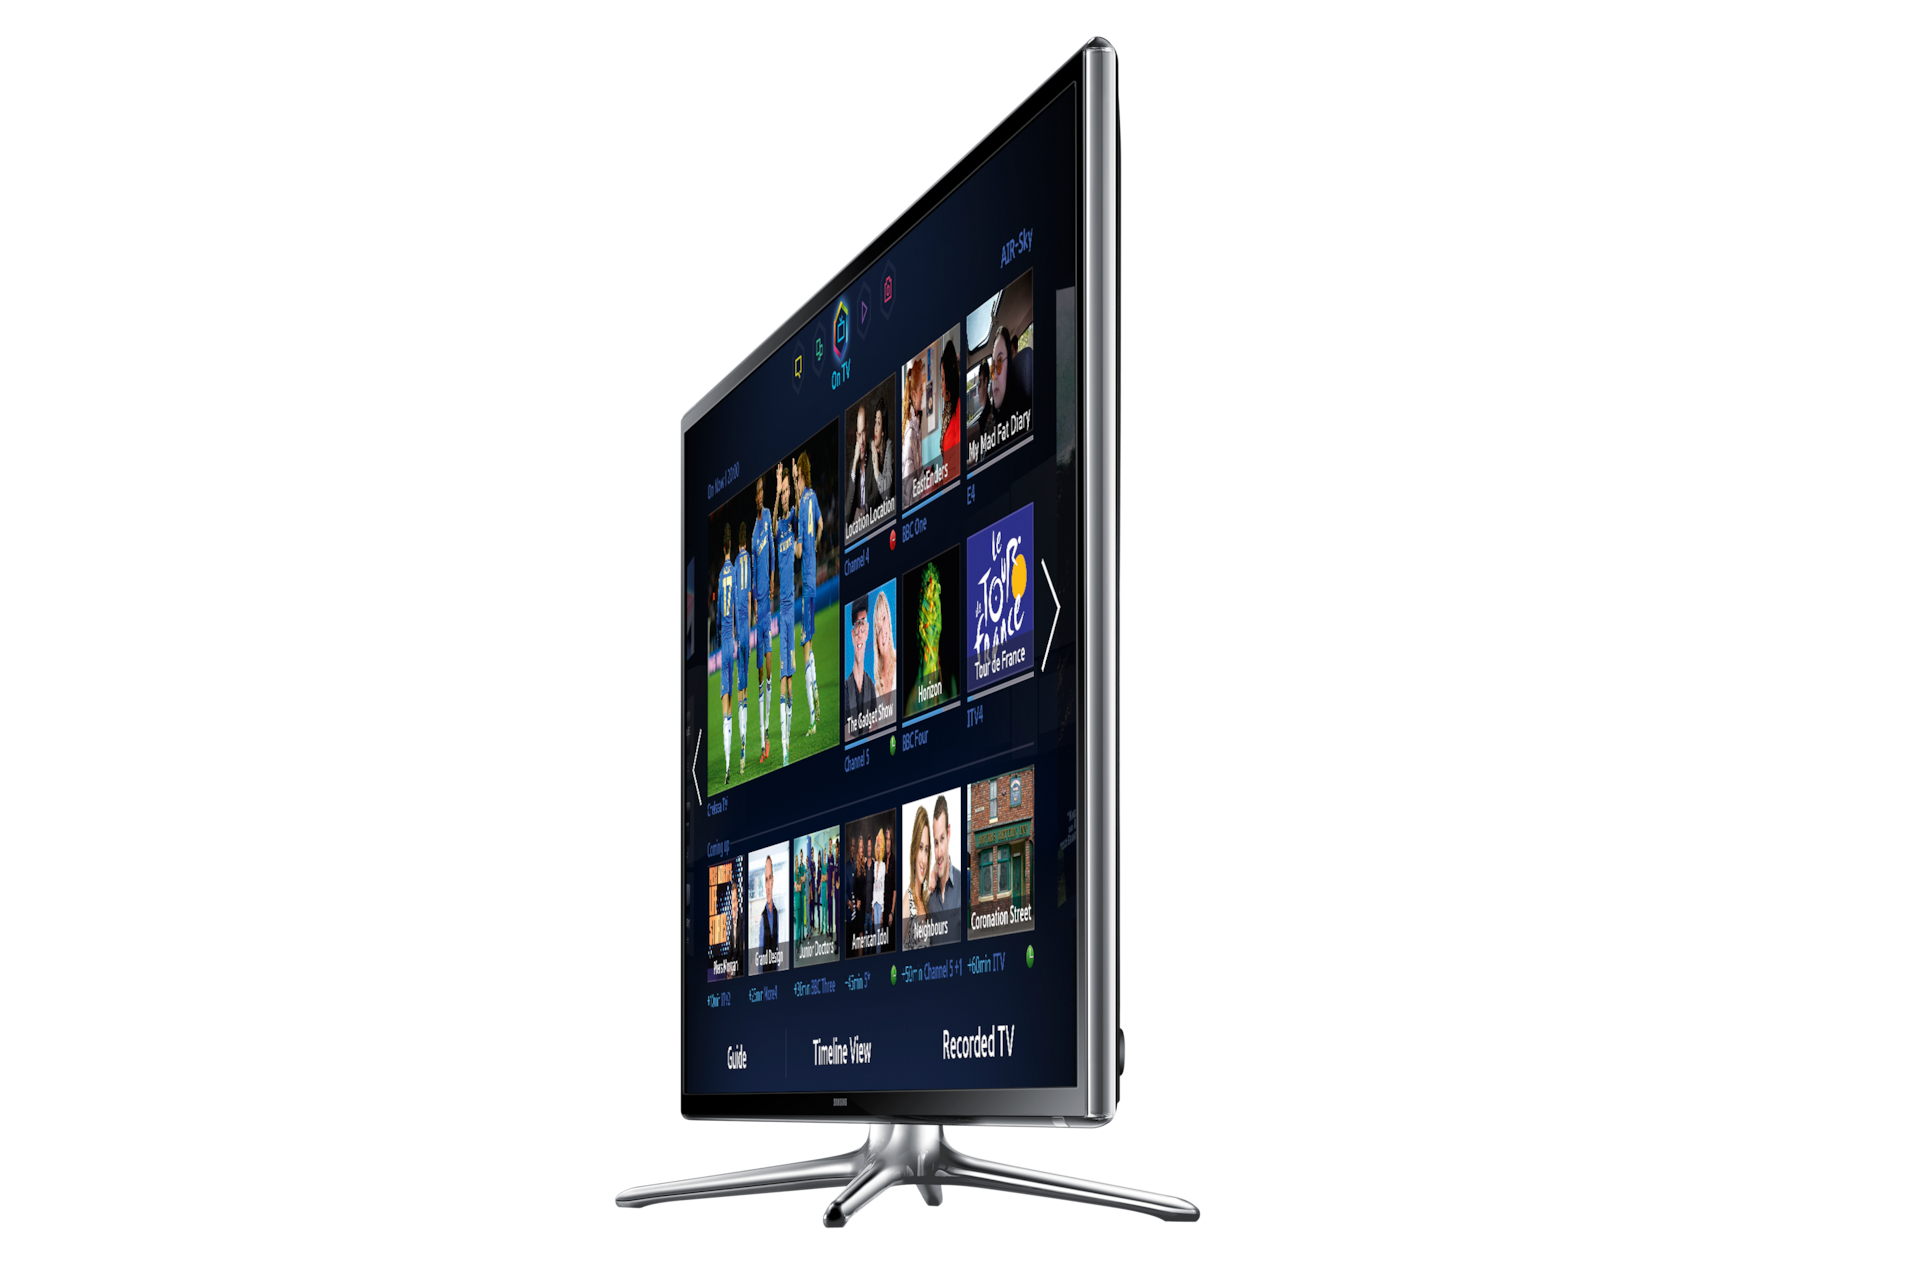 Samsung 46 Inch F6320 Series 6 Smart 3d Full Hd Led Tv